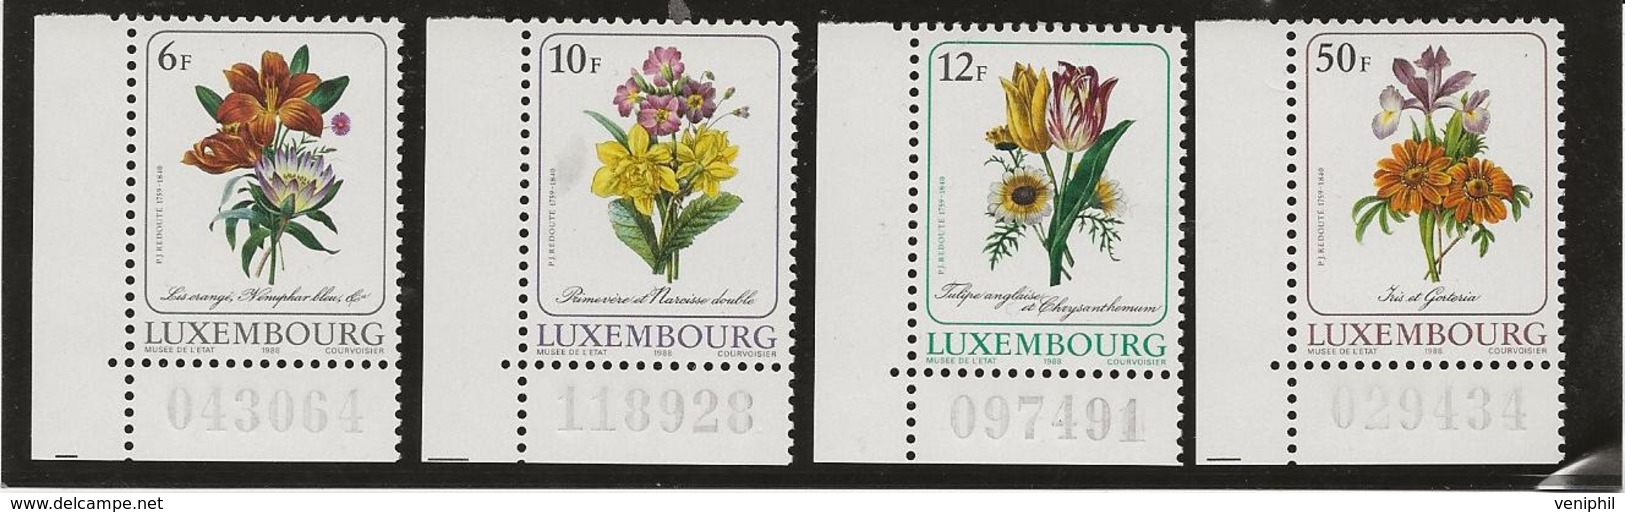 LUXEMBOURG - SERIE FLEURS N° 1140 A 1143 -NEUVE SANS CHARNIERE -ANNEE 1988 - Ongebruikt